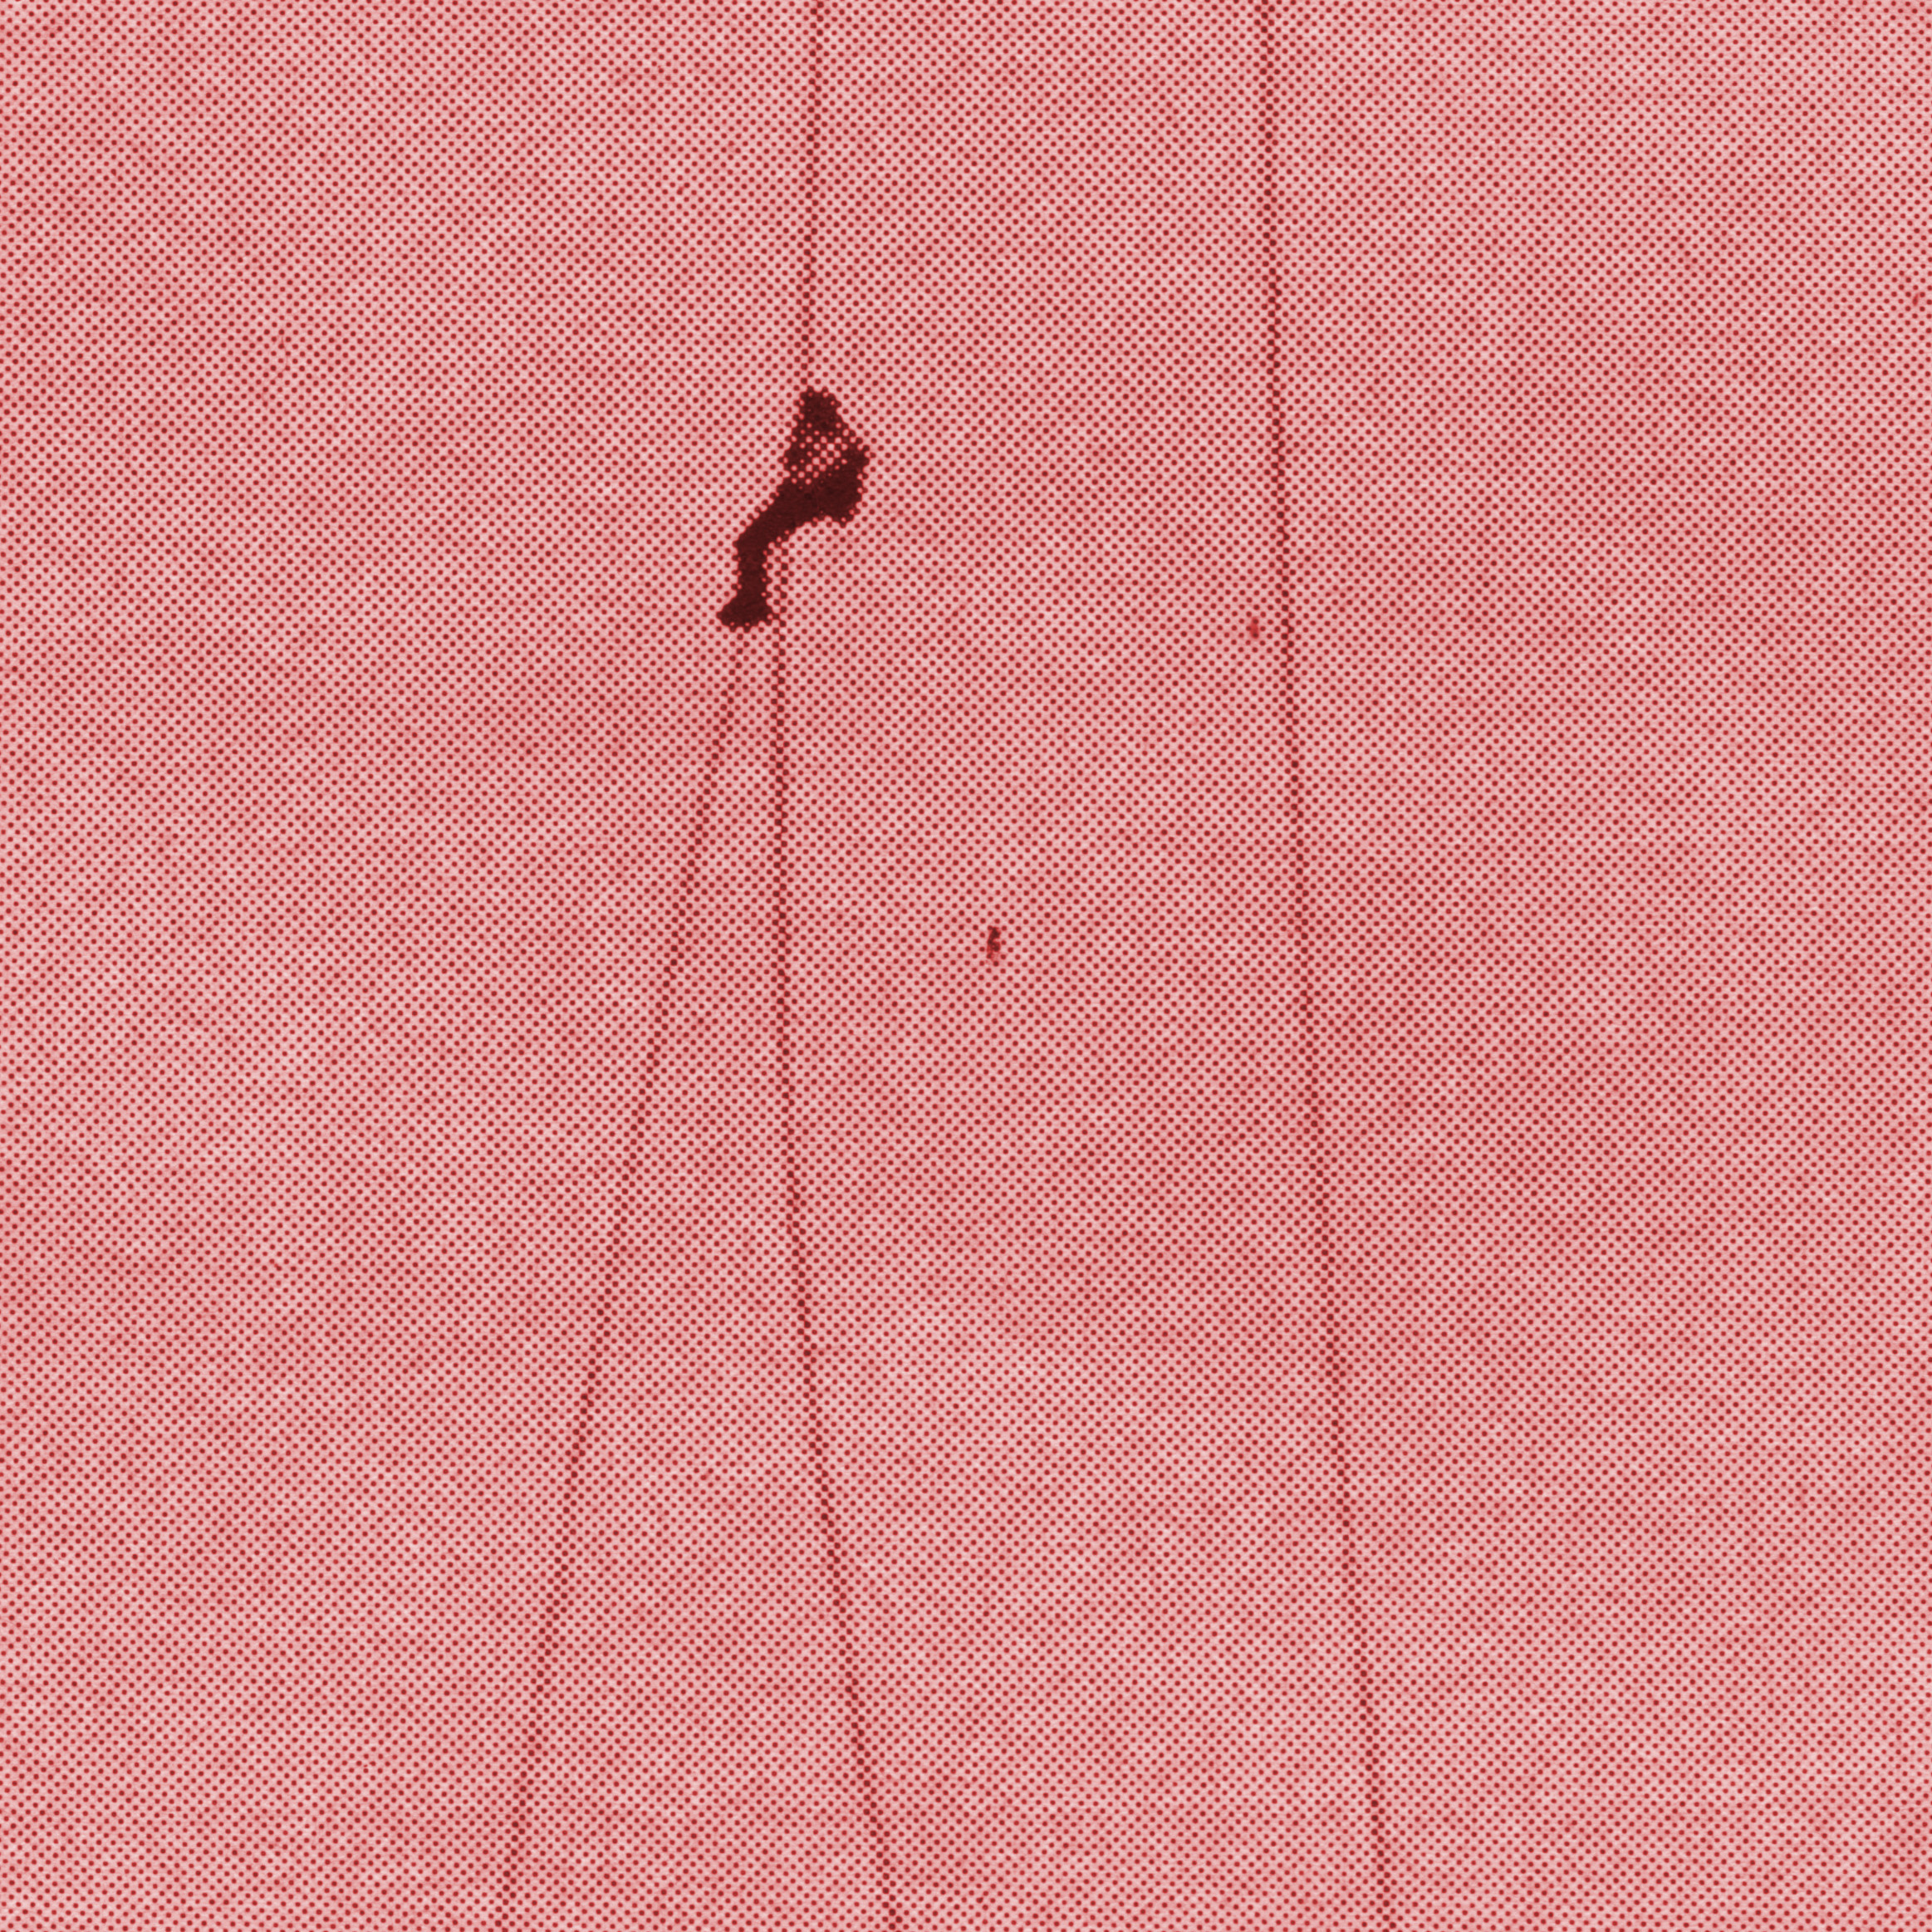 trapeze1.jpg